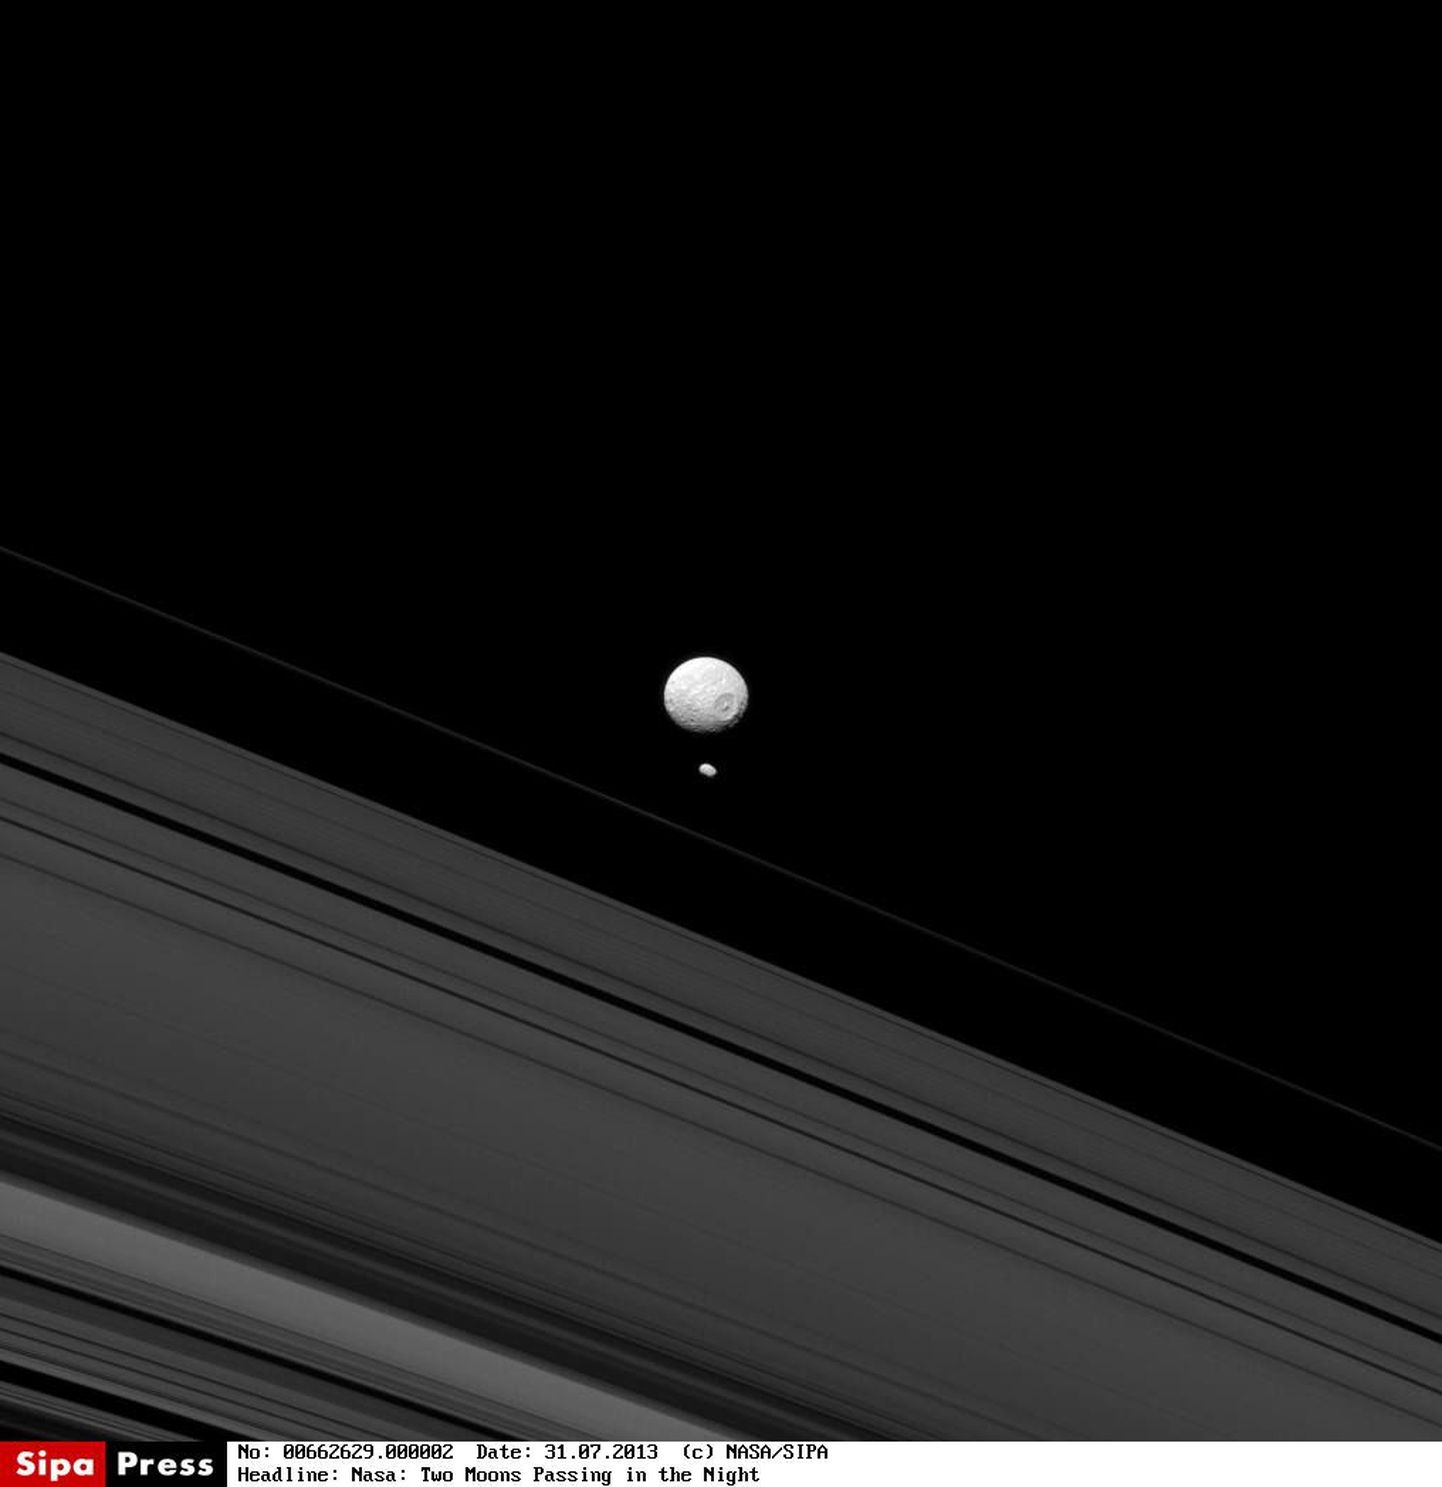 Спутники Сатурна – Мимас и Пандора.